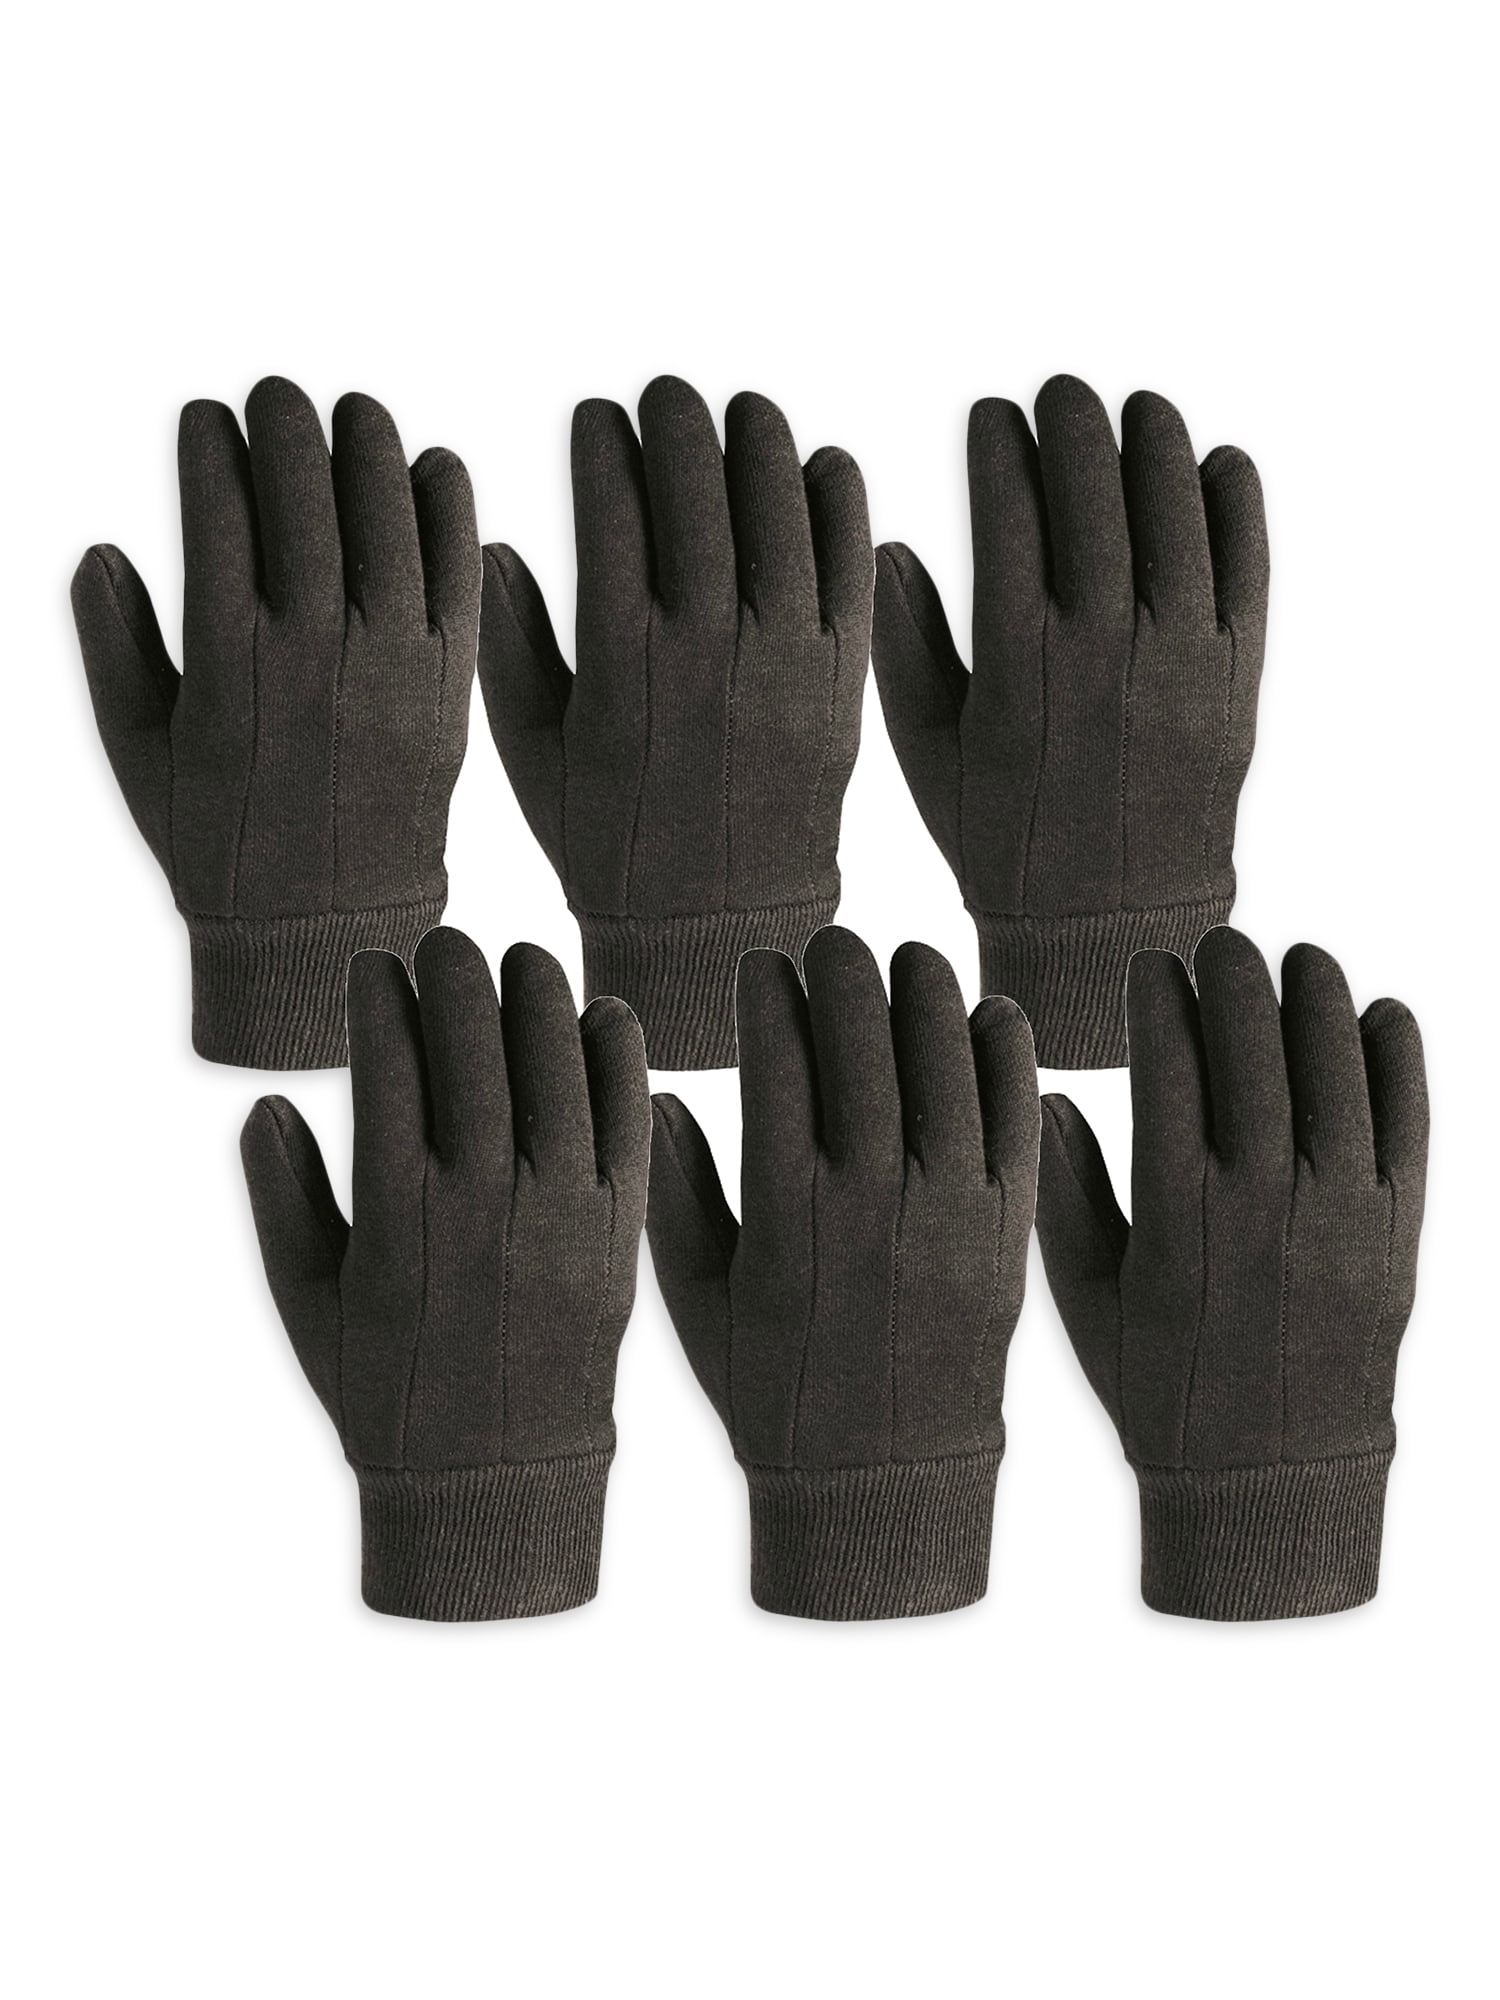 Wells Lamont Men's Brown Jersey Glove, 6 Pack - Walmart.com